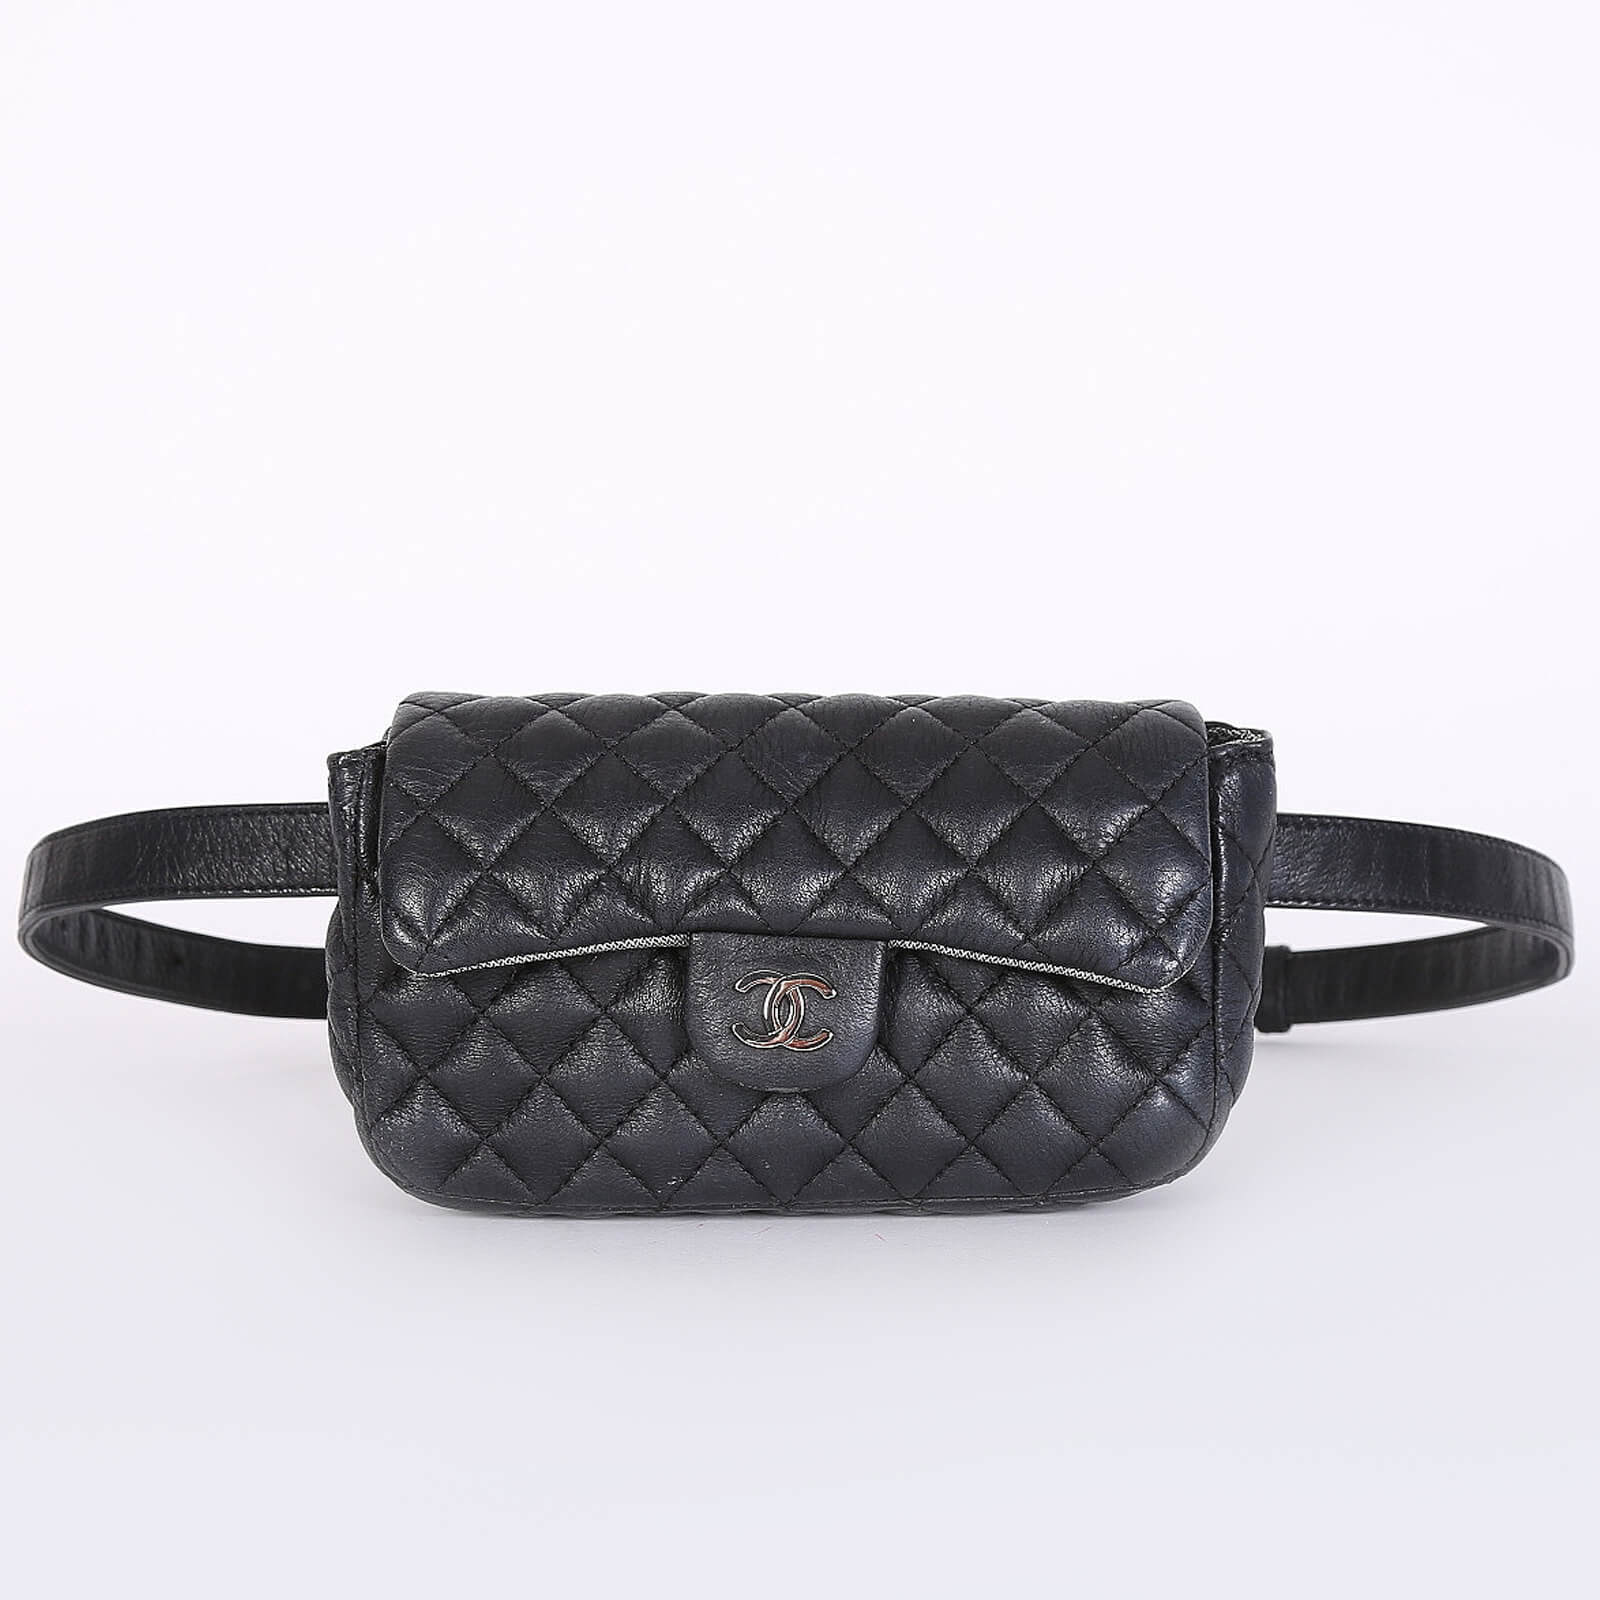 CHANEL, Bags, Chanel Soldlambskin Quilted Waist Belt Bag Black Uniform